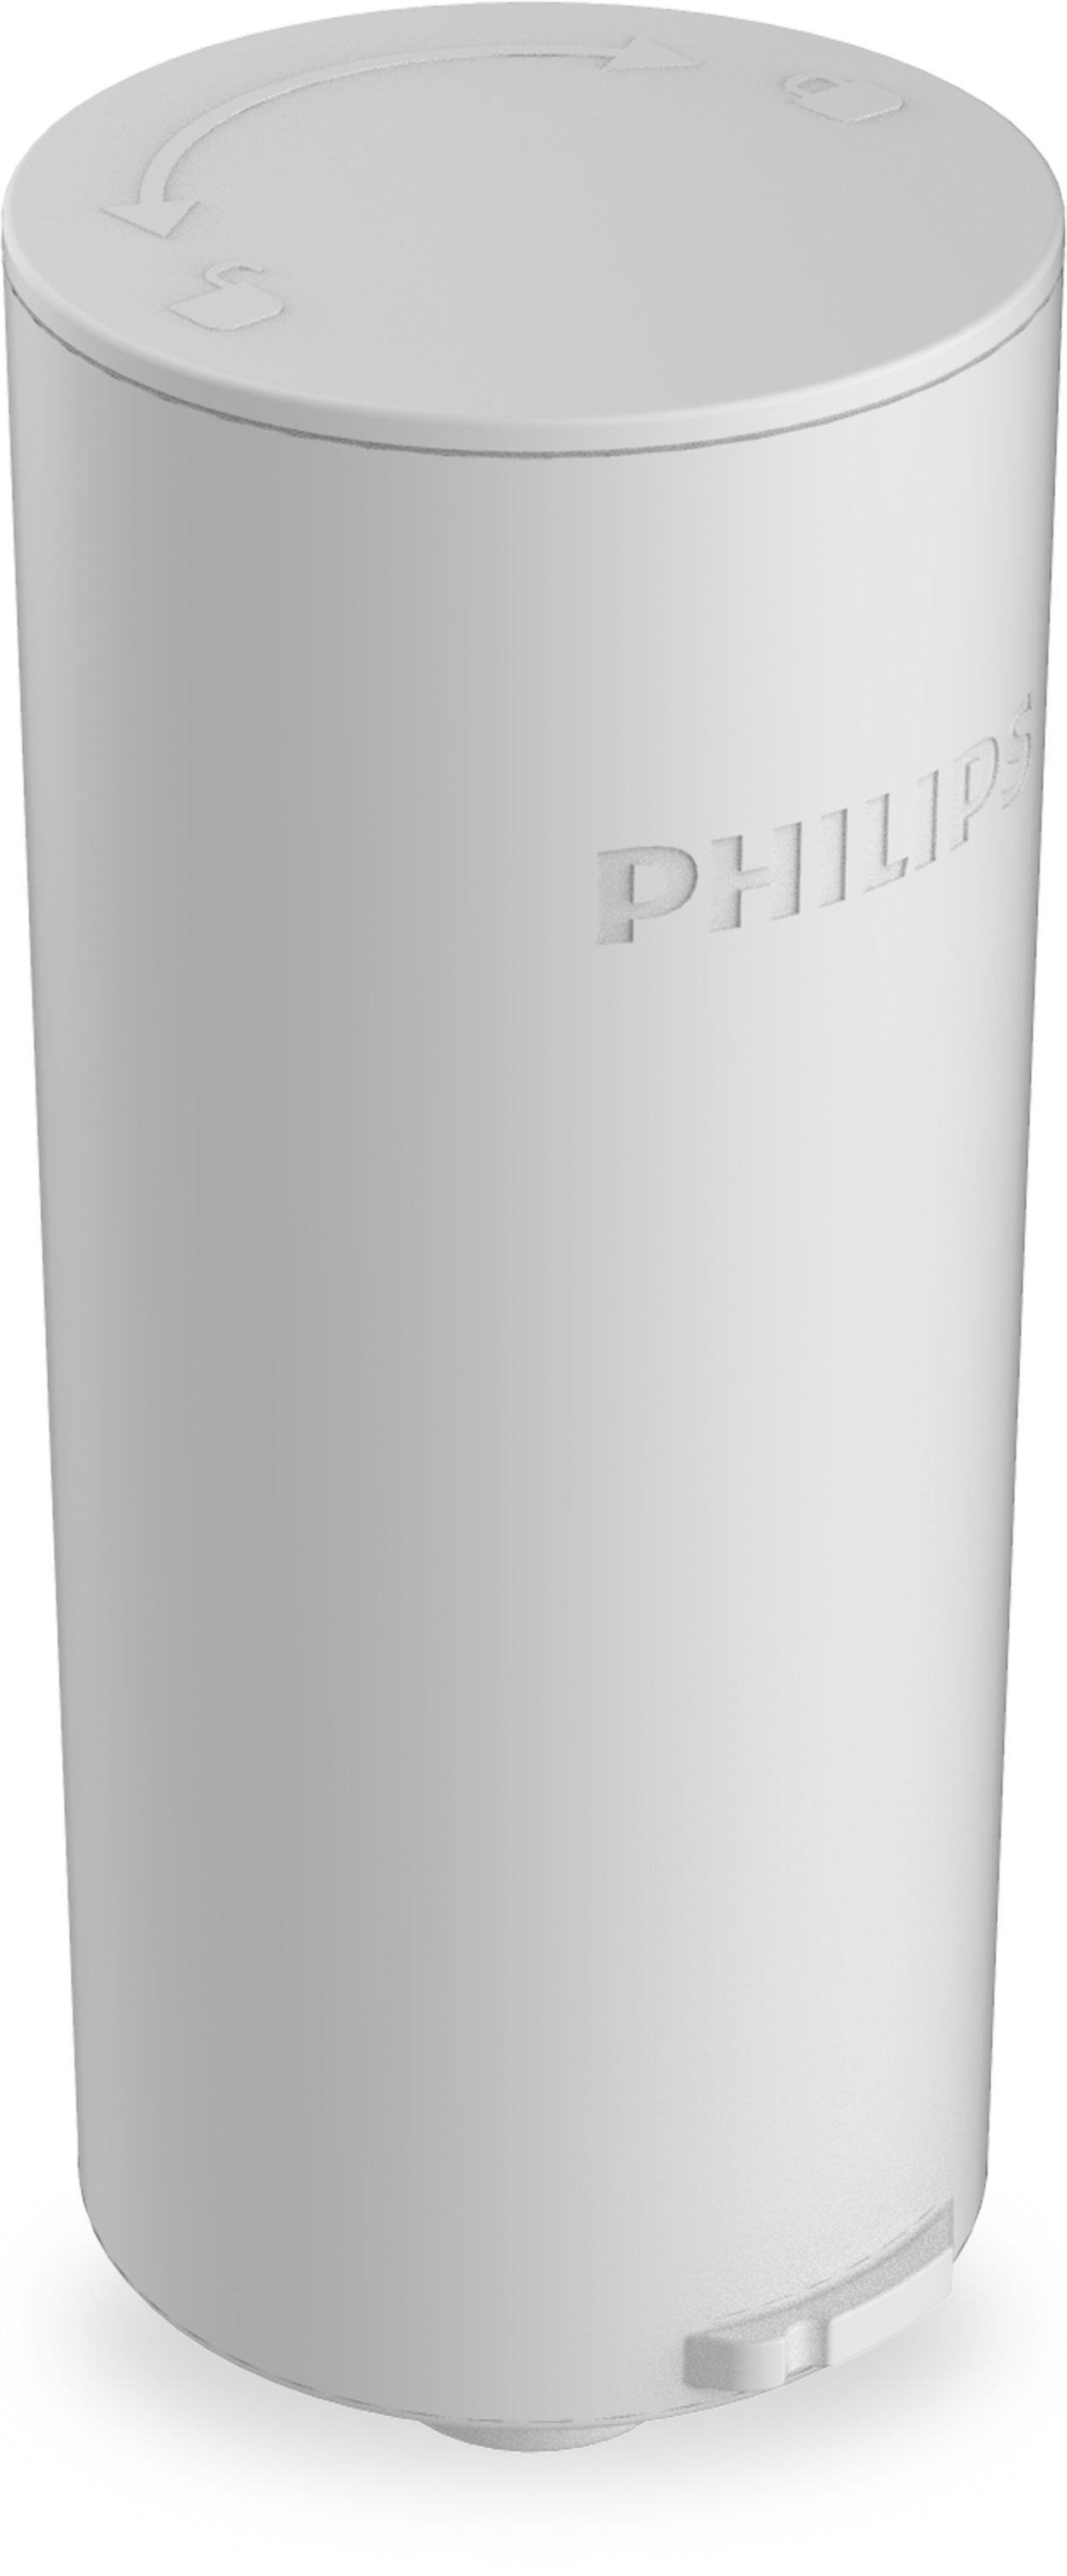 Filtre pour Carafe Filtrante Philips AWP212/24 MICRCLEANX